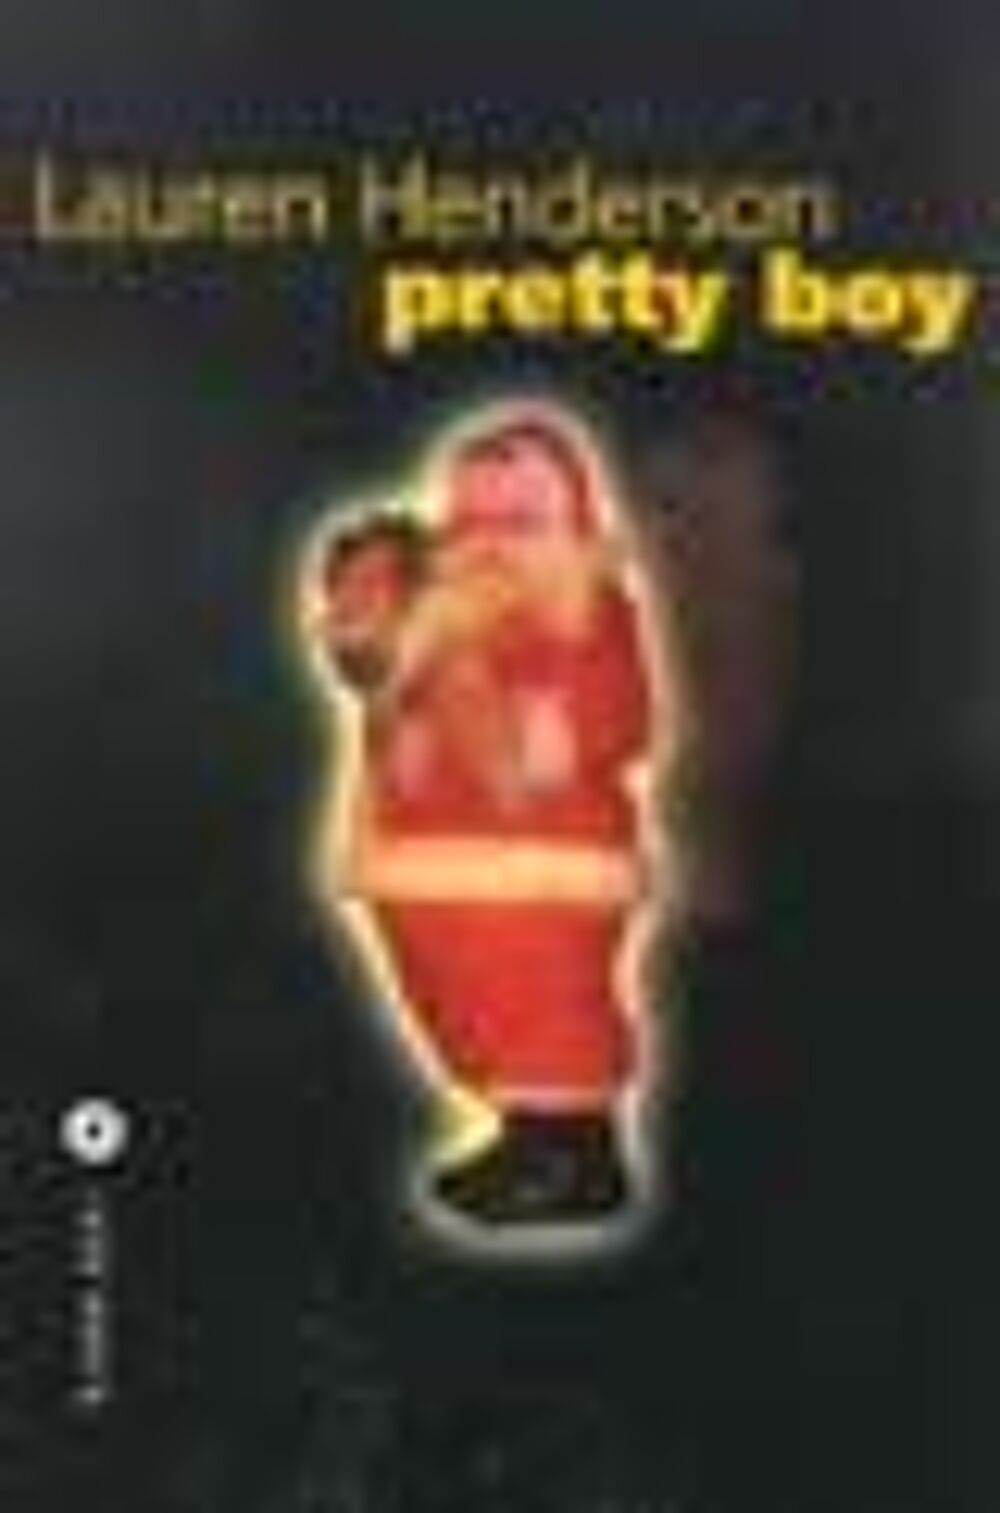 Pretty boy - Lauren Henderson Livres et BD